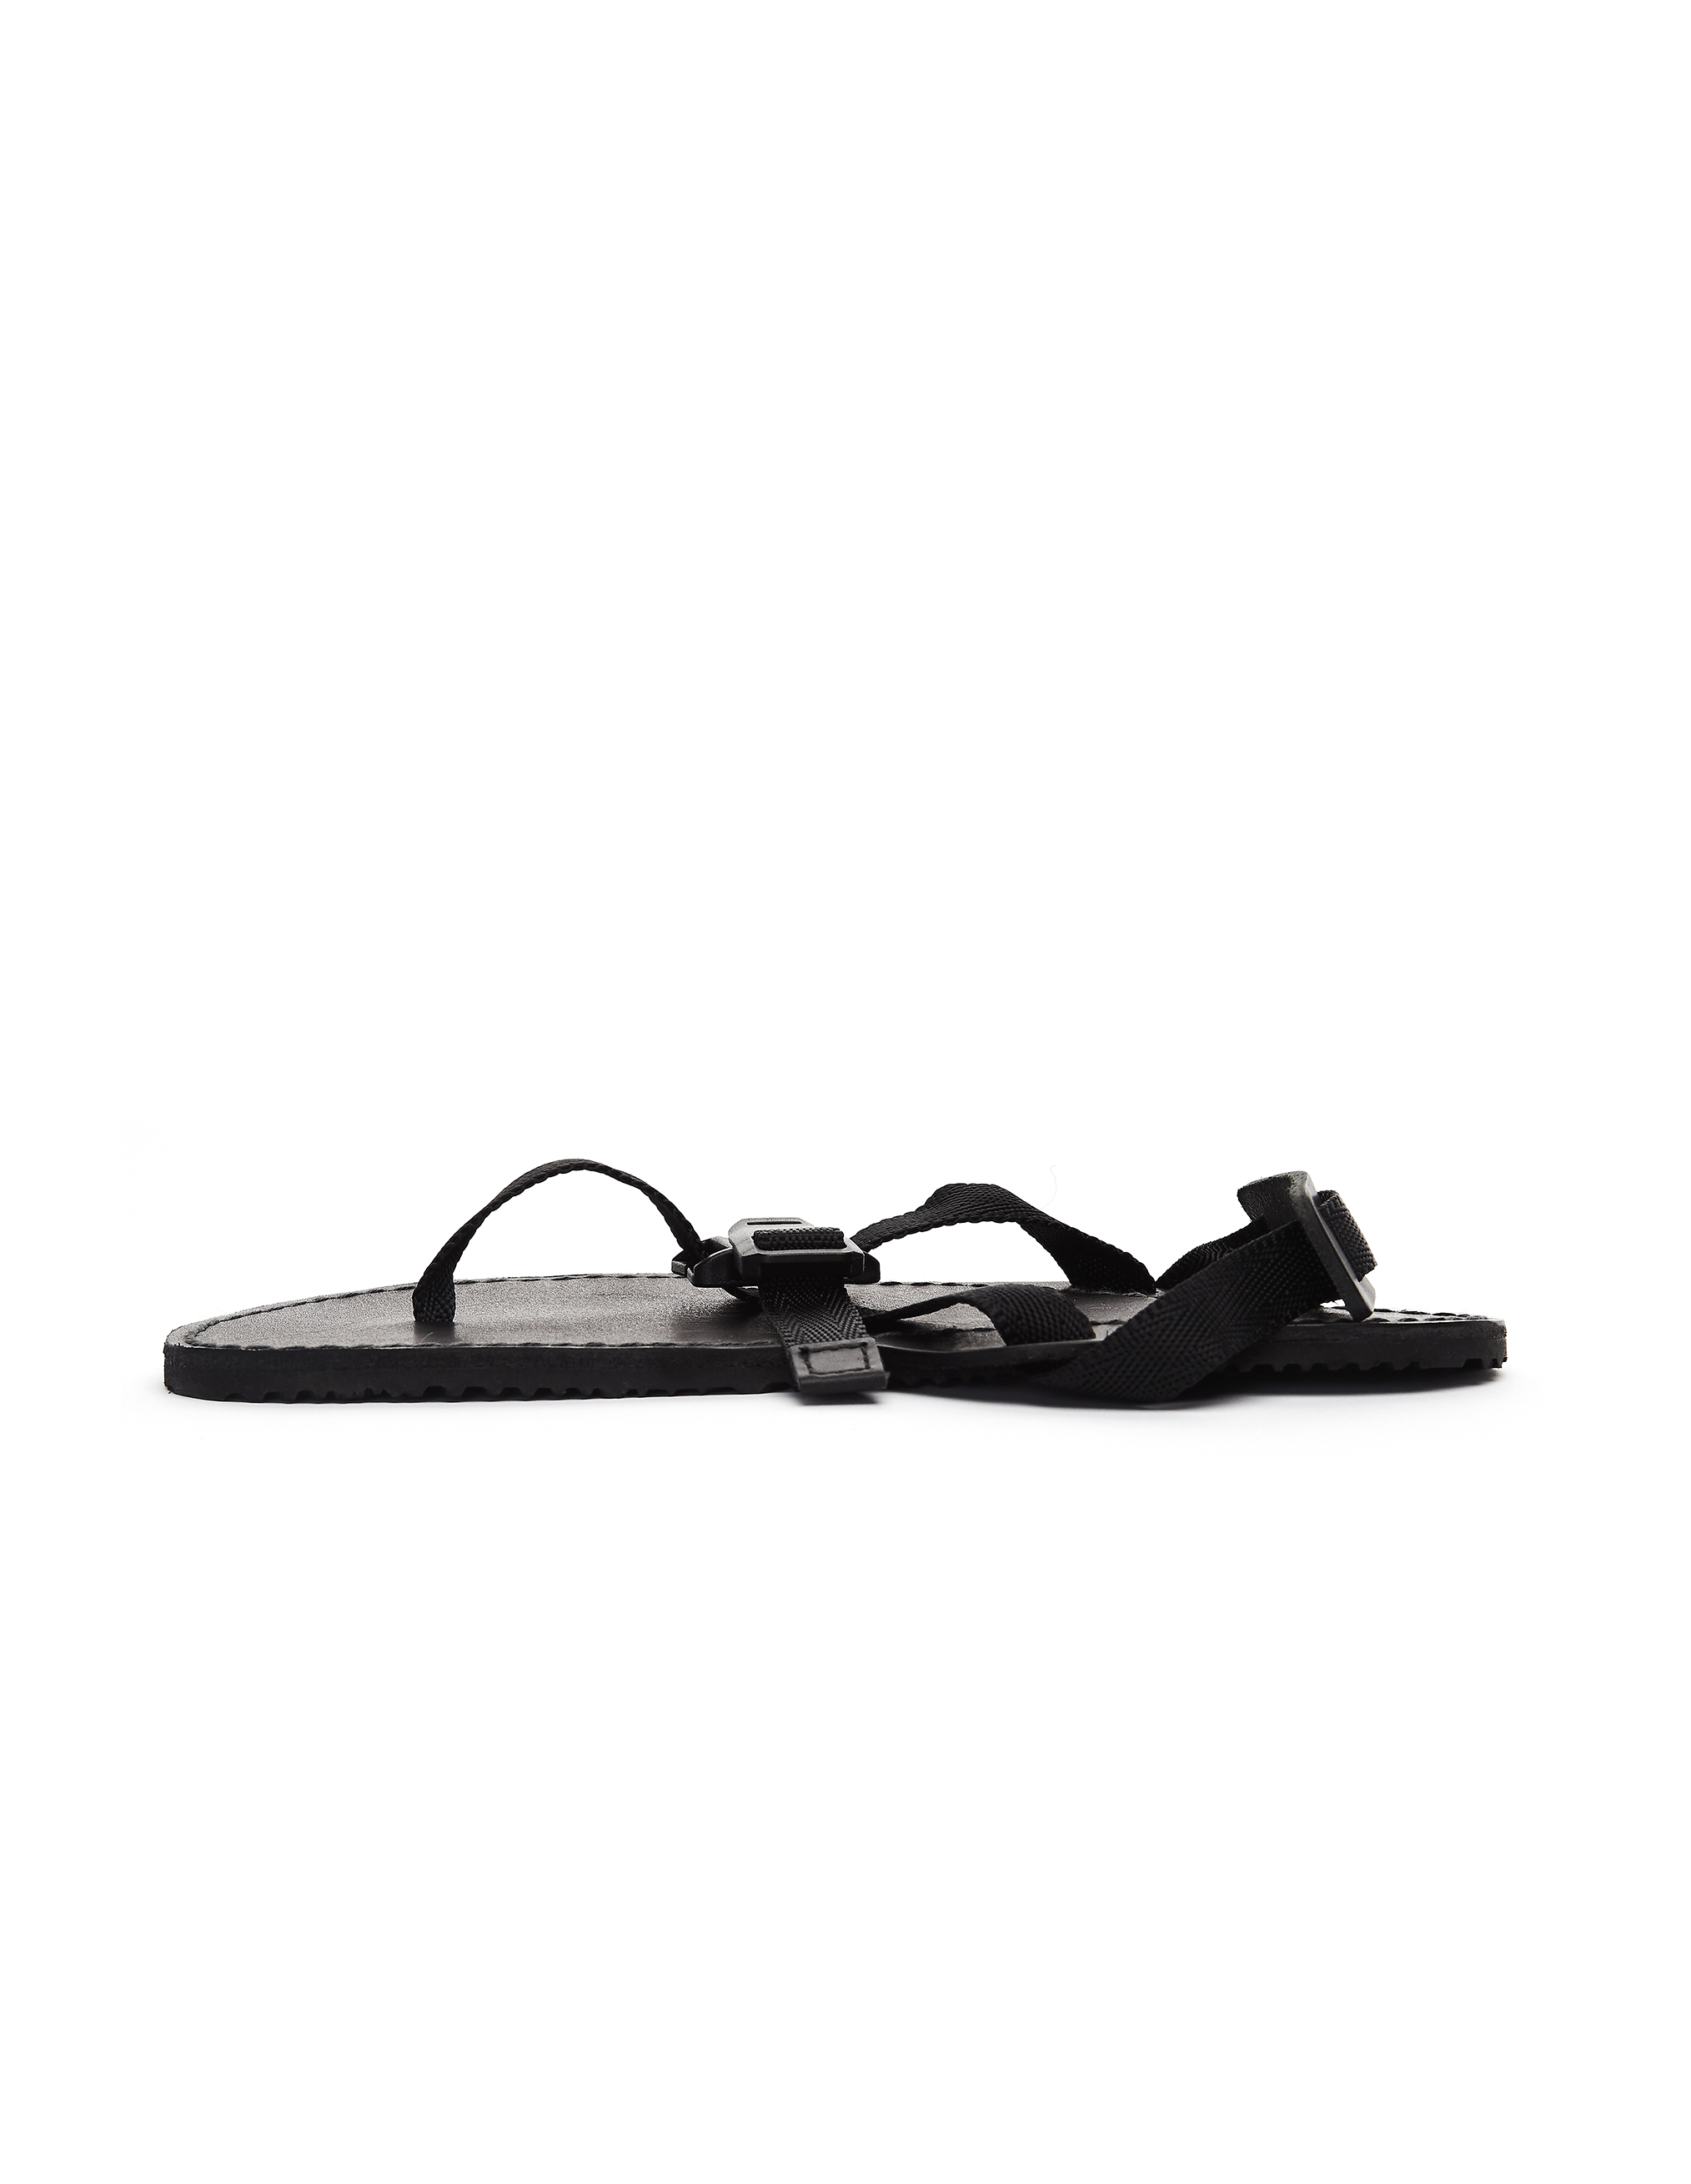 Черные сандалии Devise Strap - Hender Scheme NC-S-DST/blkblk Фото 2